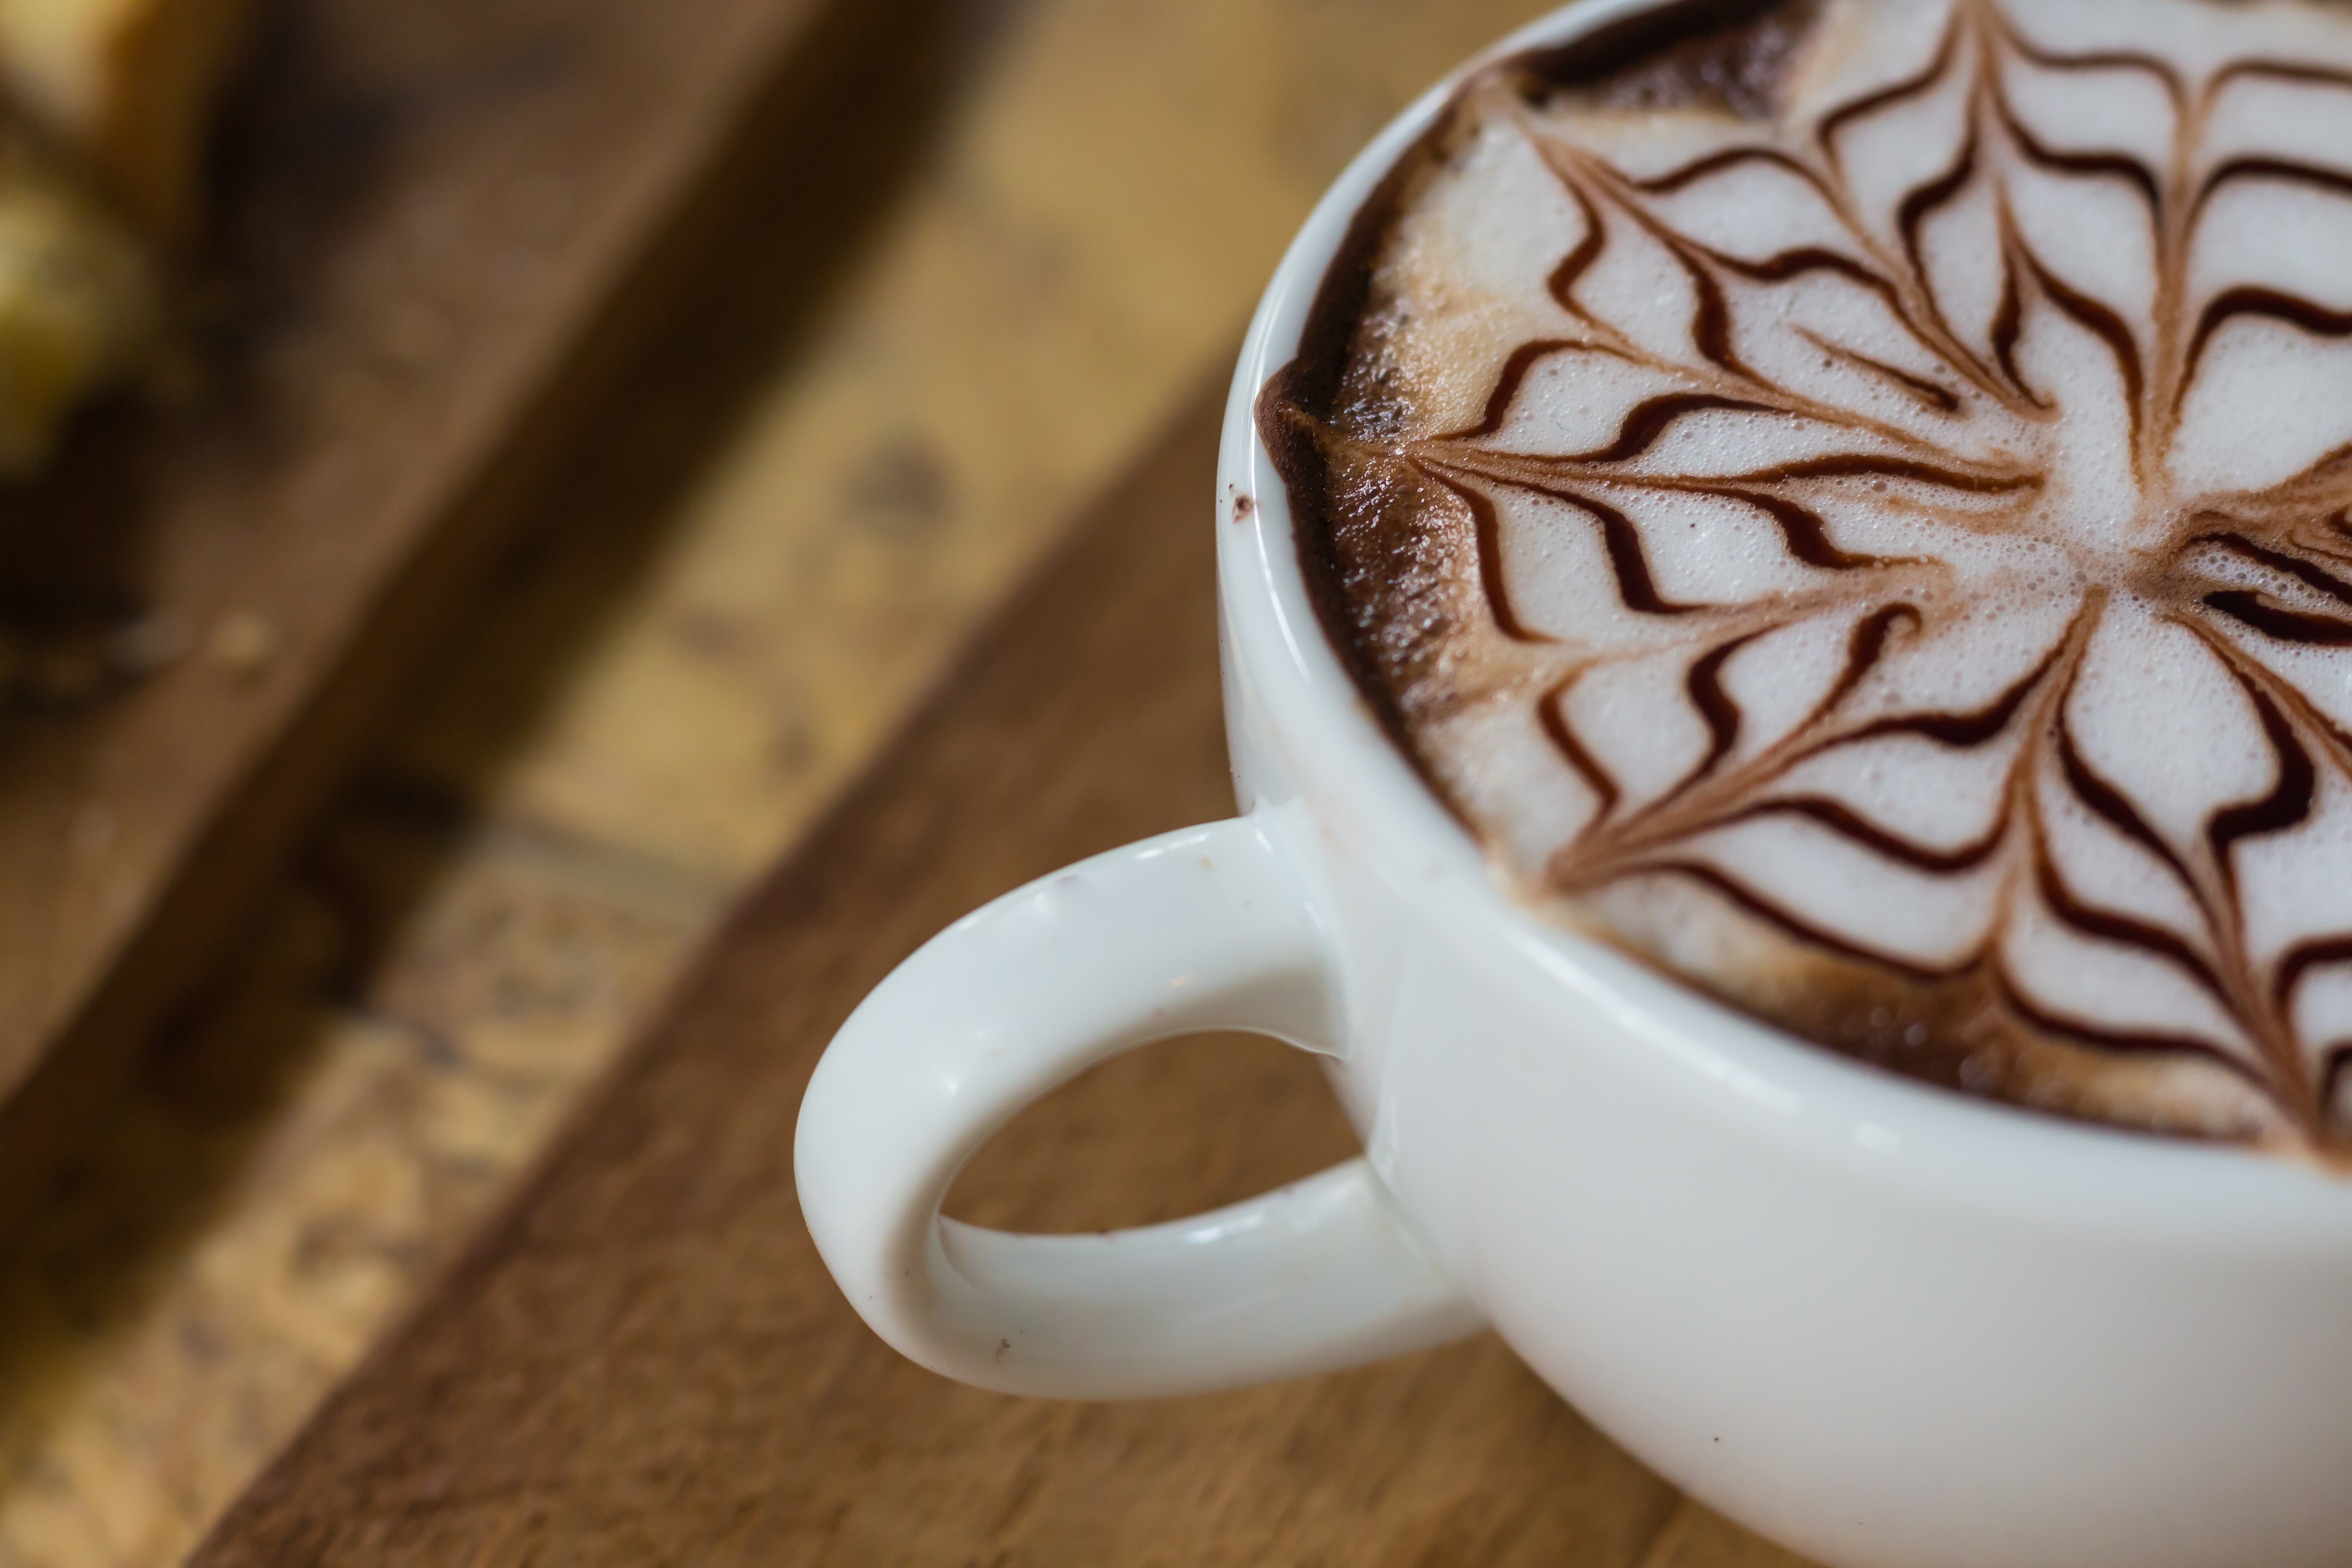 latte art on brown ceramic mug